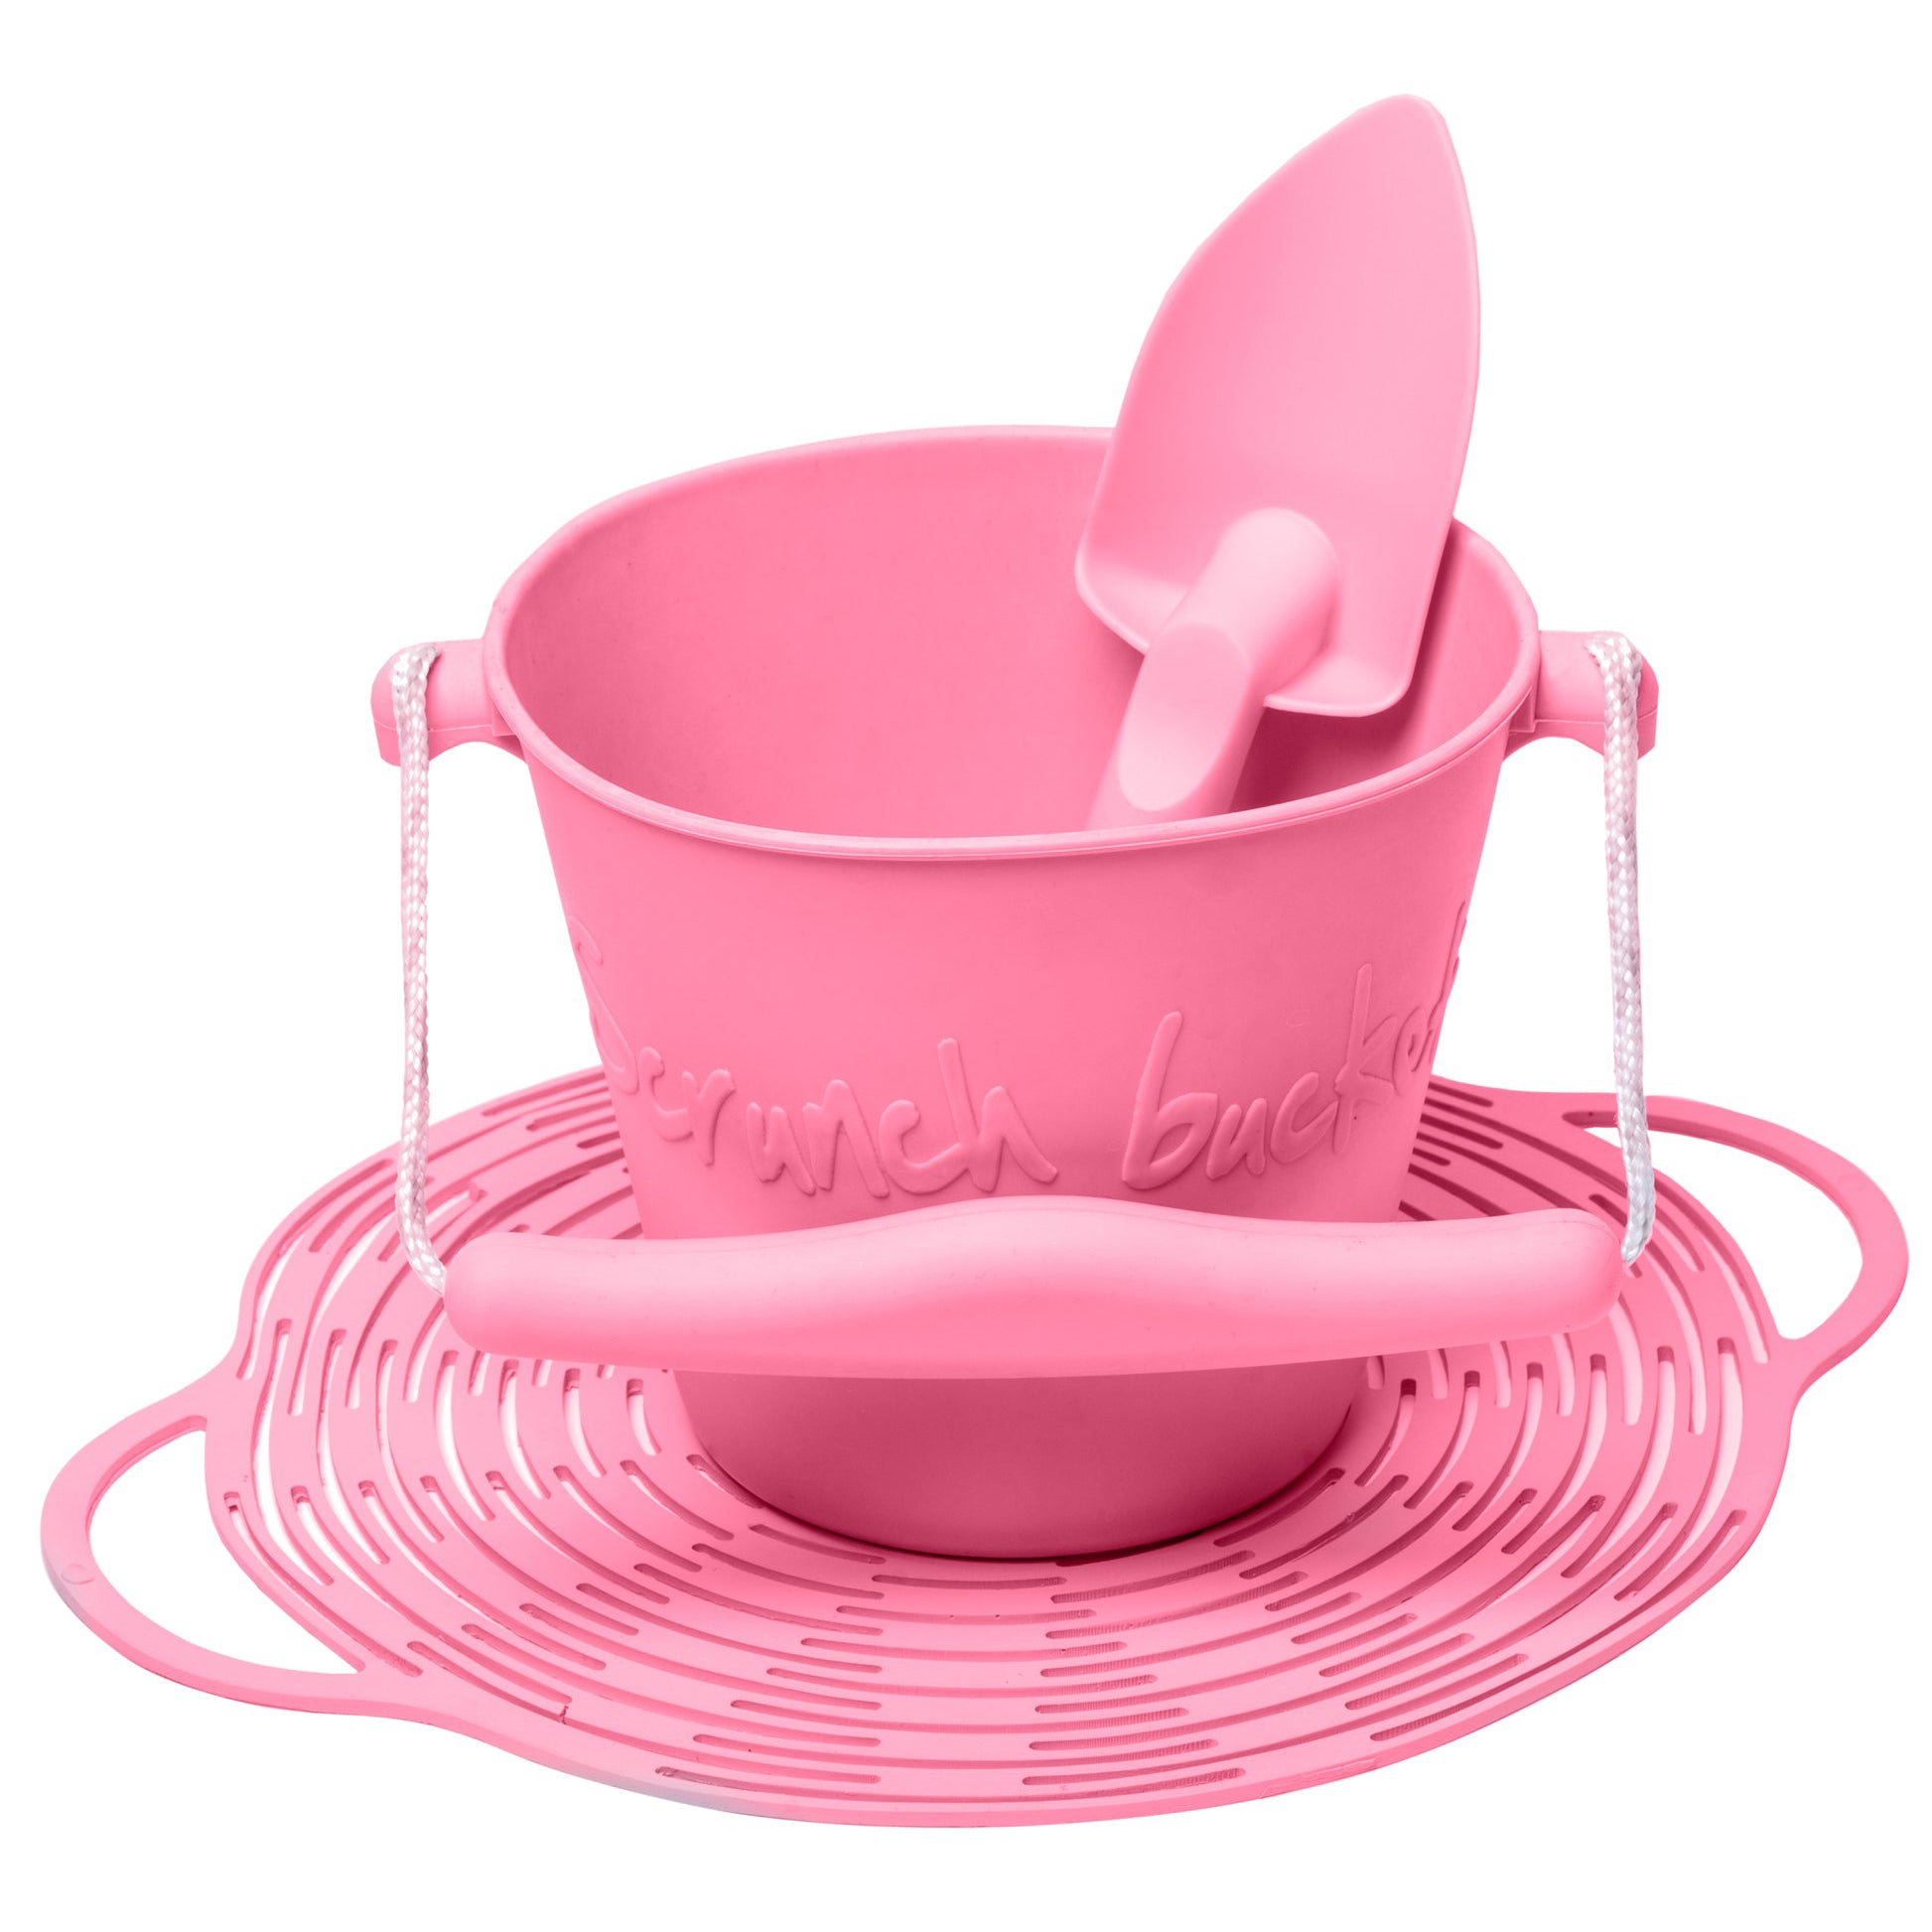 Scrunch set - spade, bucket, bag (flat) in flamingo pink 